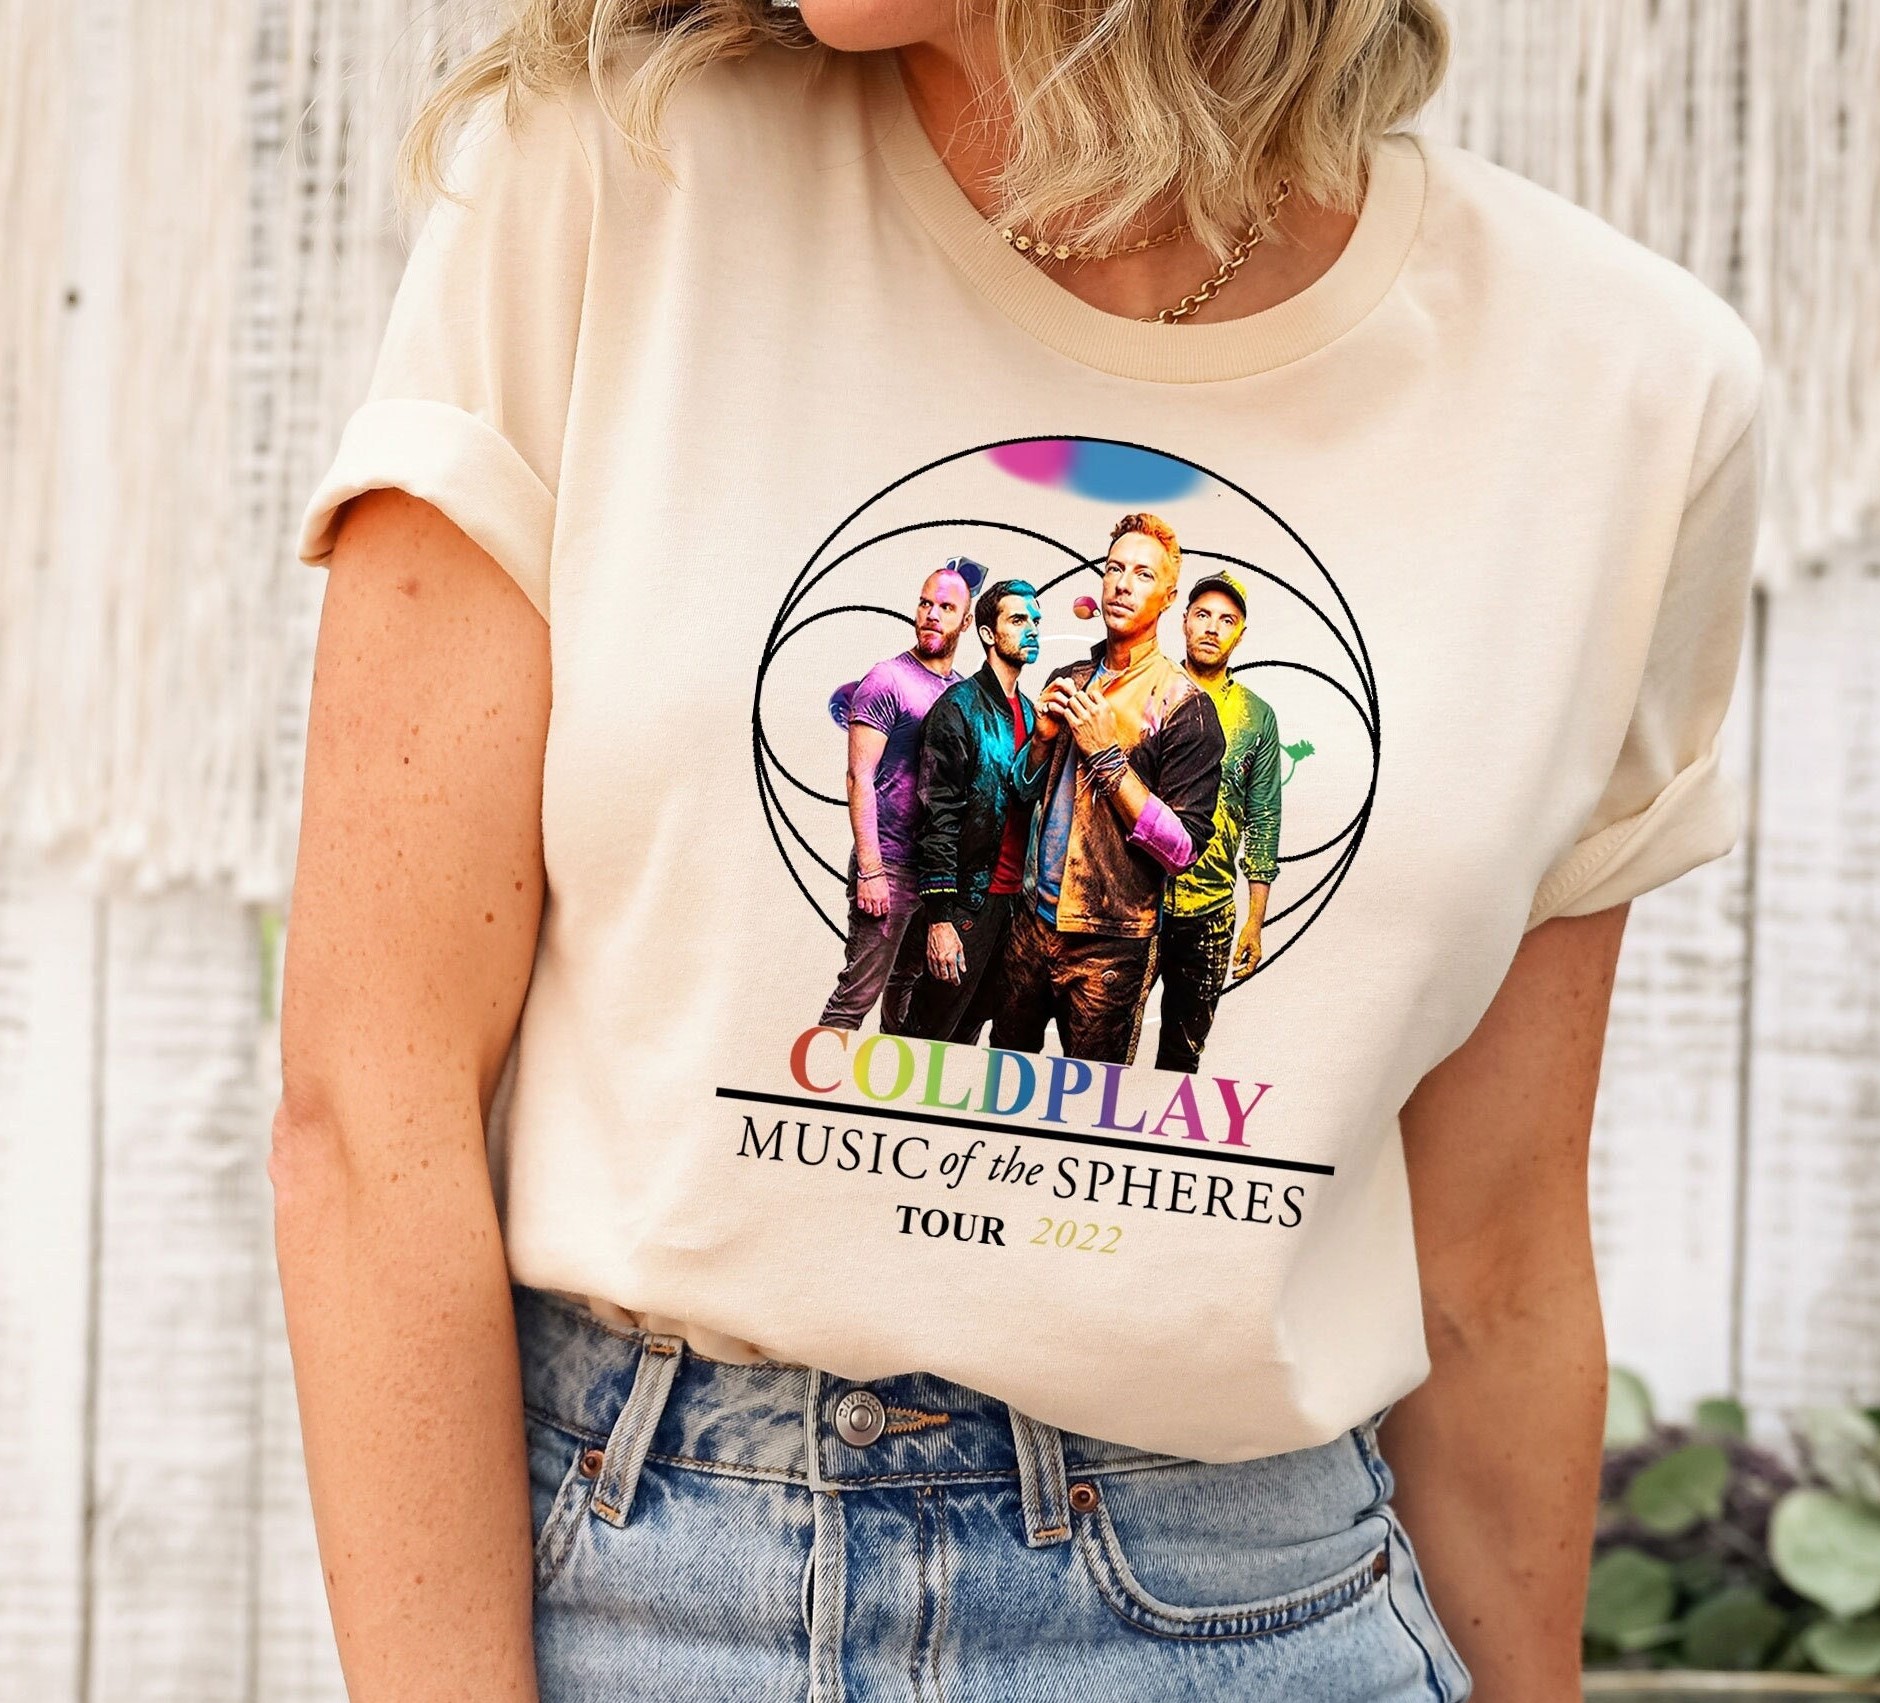 Coldplay True Love Music T shirt Unisex Adult